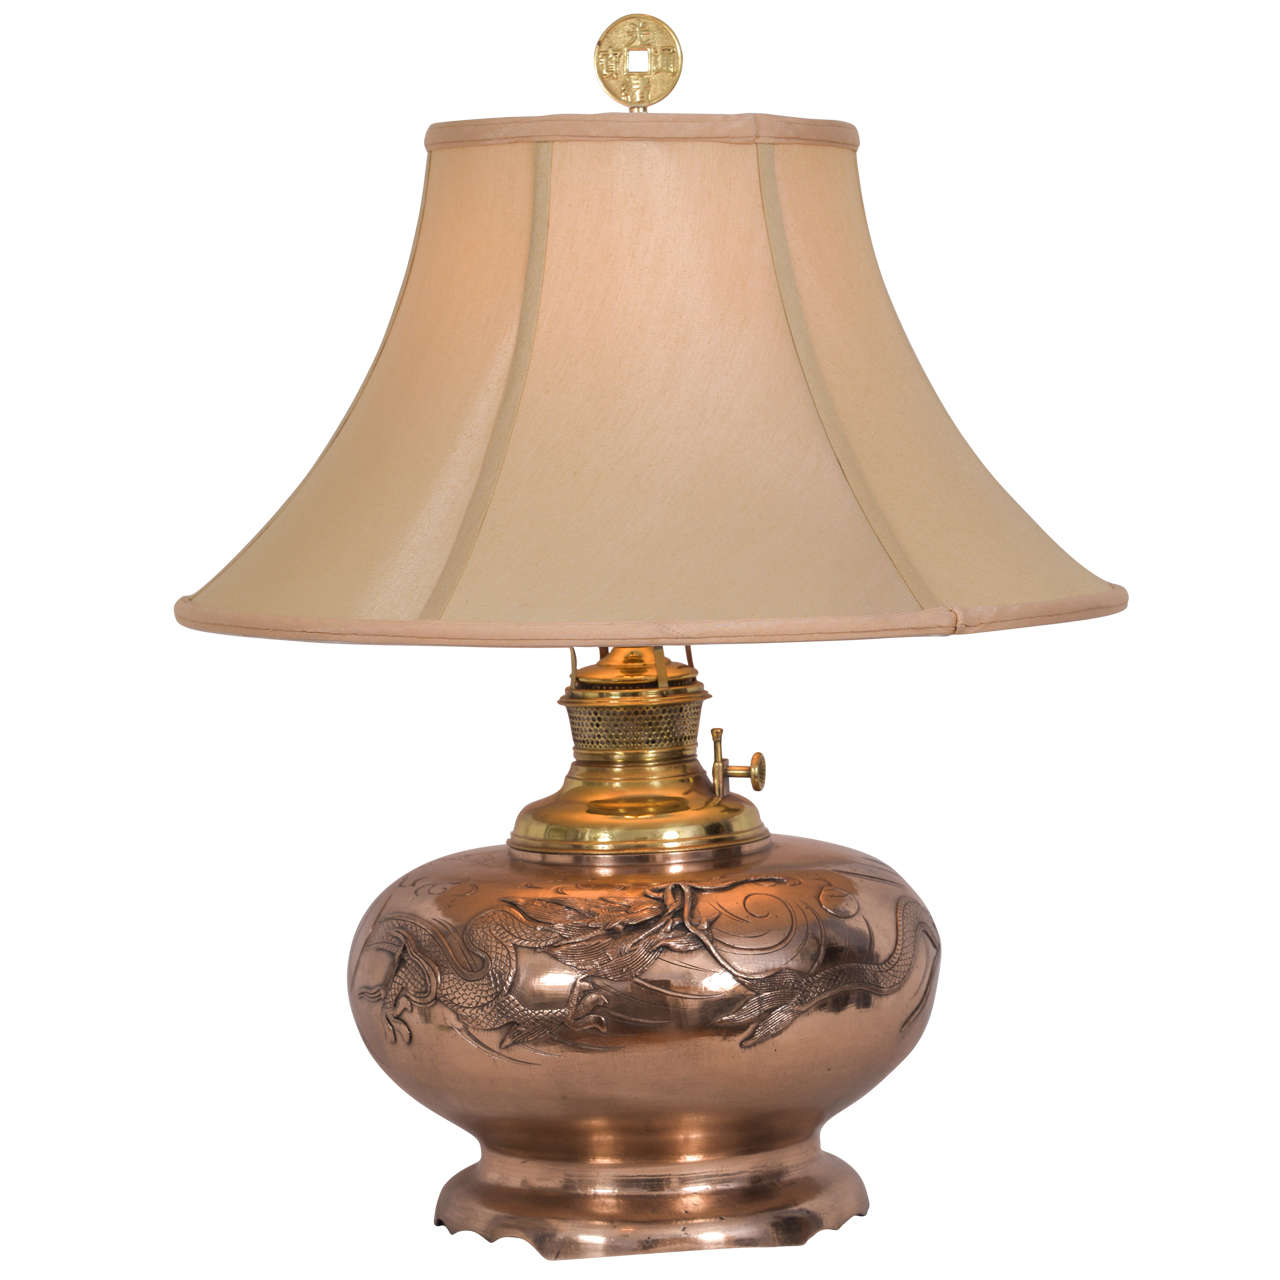 Cast Copper, Asian Design Converted Oil Lamp For Sale